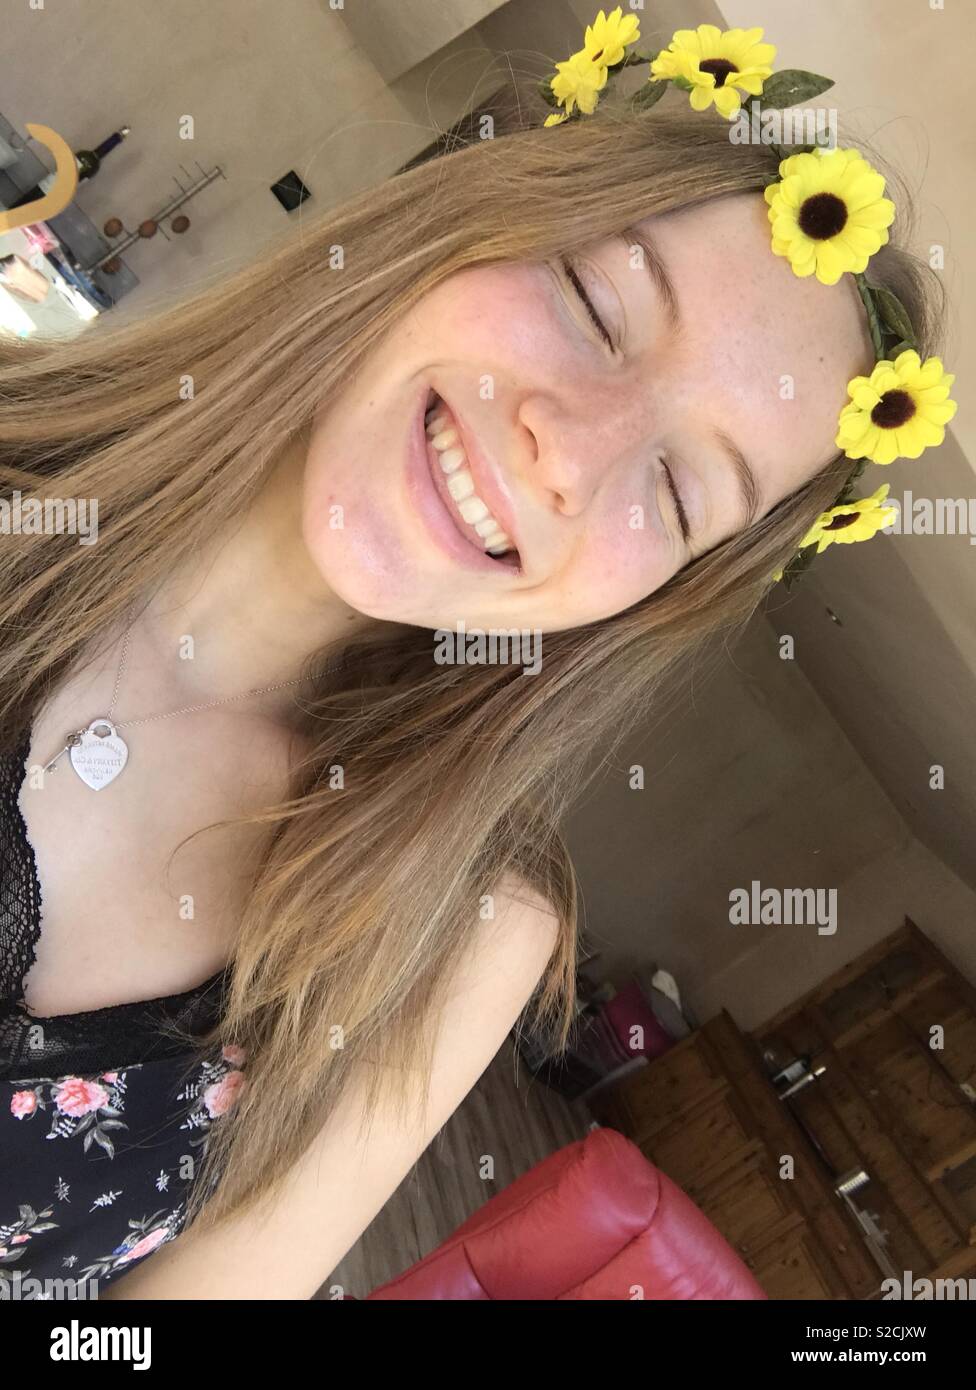 Girl in flower crown expressing a joyful smile Stock Photo